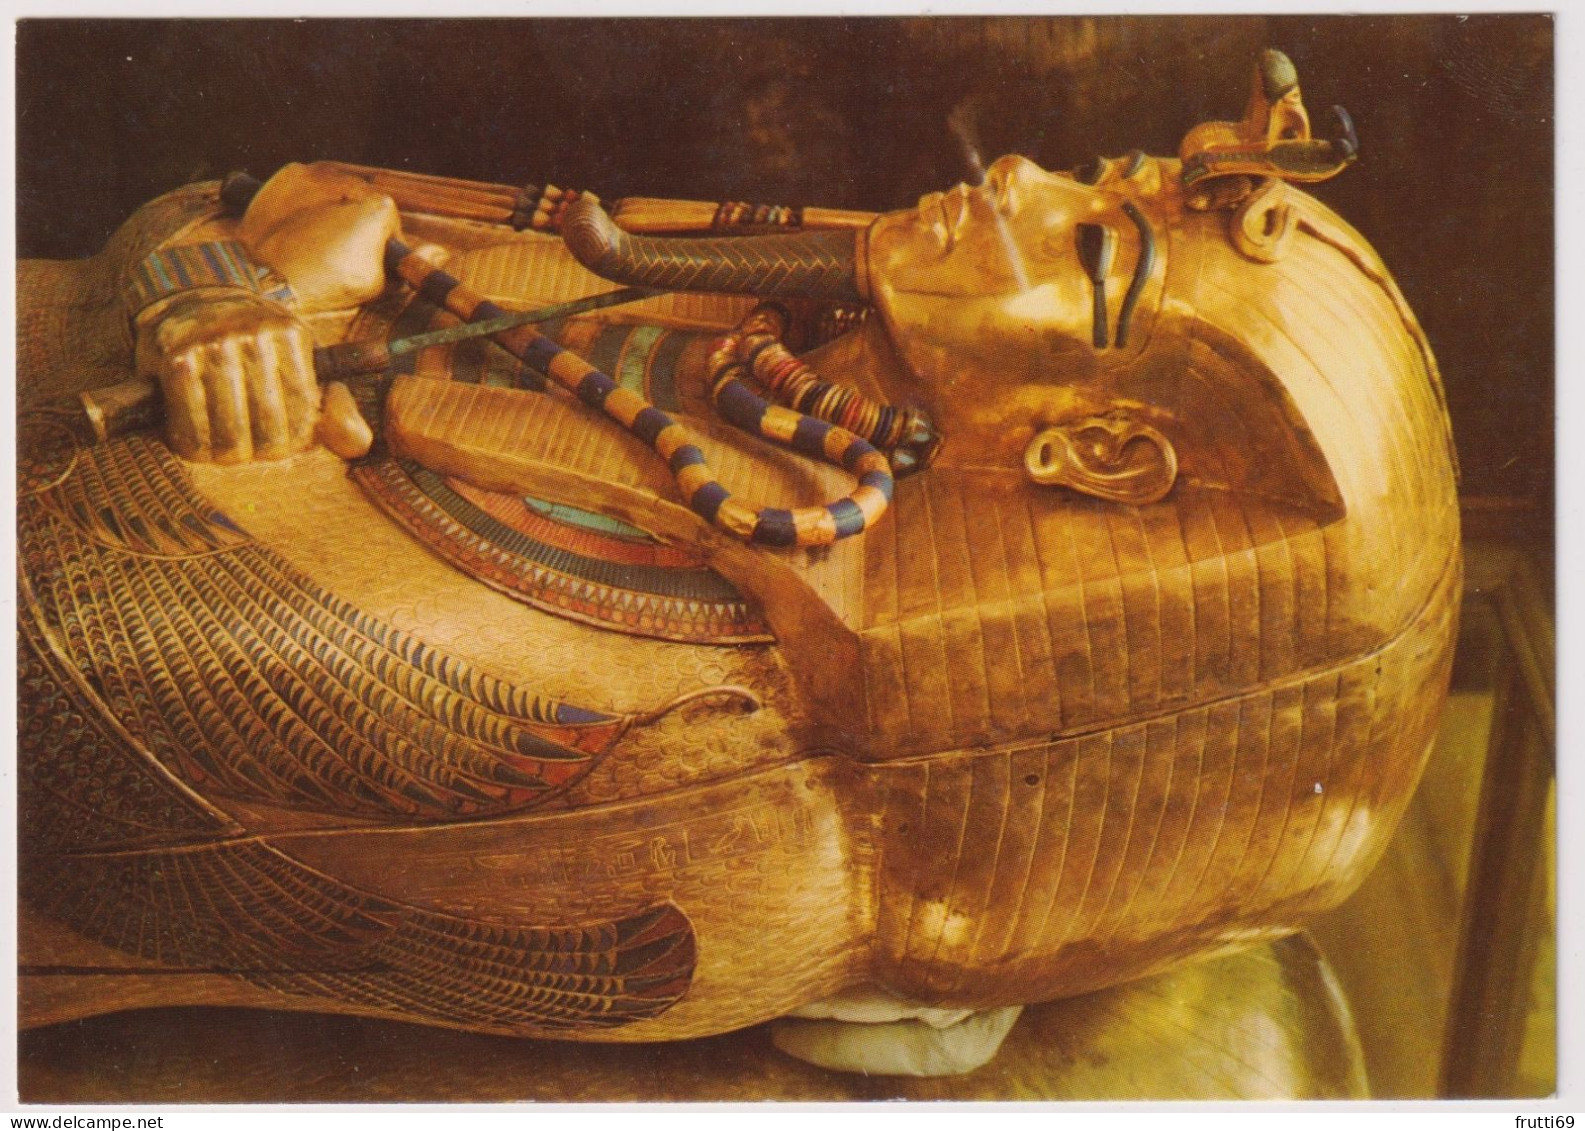 AK 198144 EGYPT - Cairo - Cairo Egyptian Museum - Tut Ankh Amun's Treasures - Second Coffin - Museos